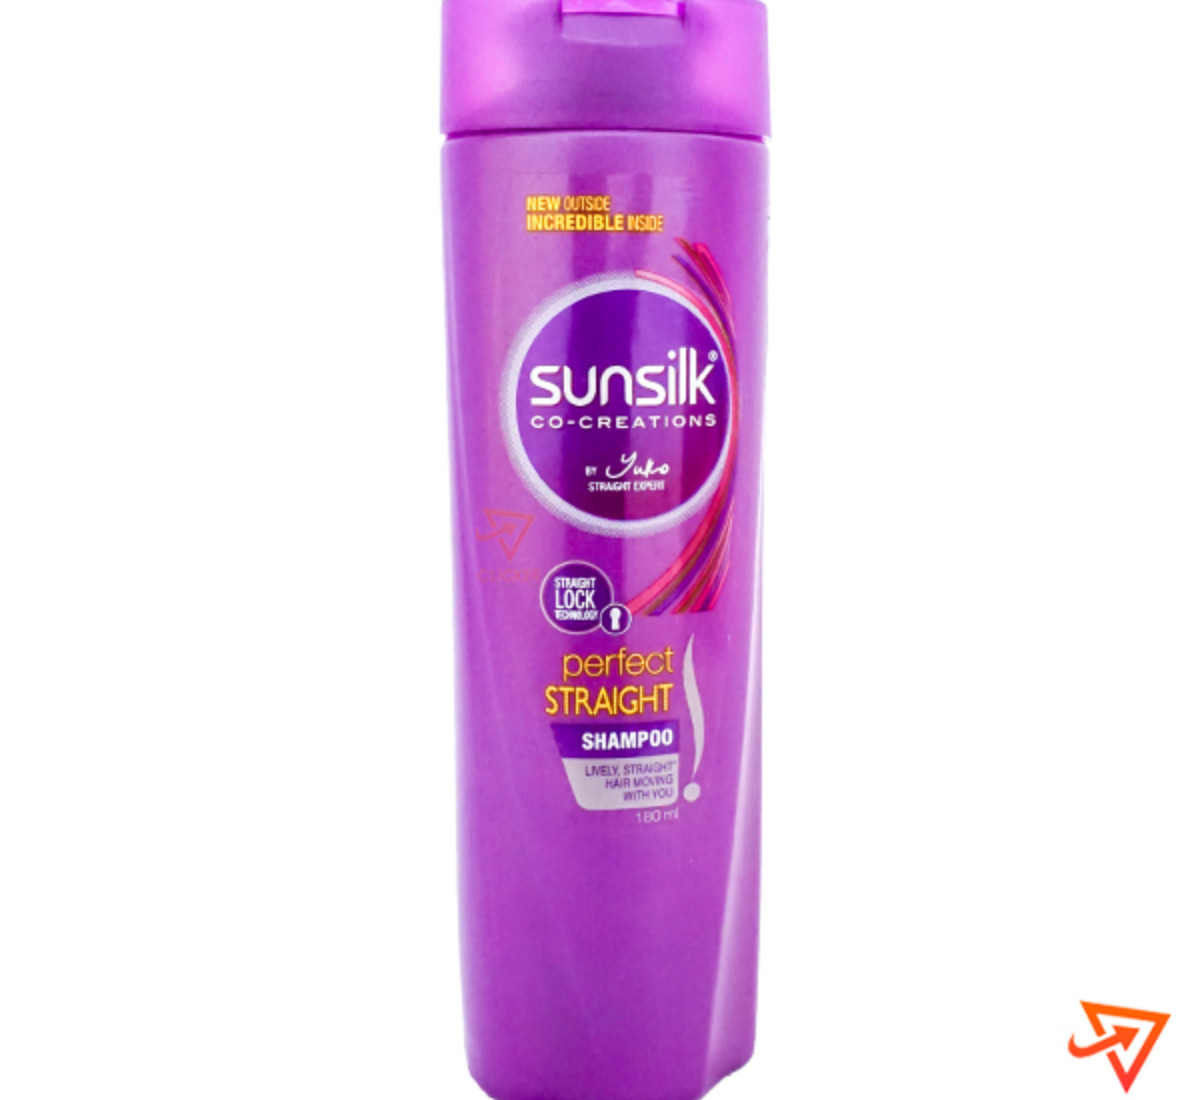 Clicker product 180ml SUNSILK perfect straight shampoo 1111